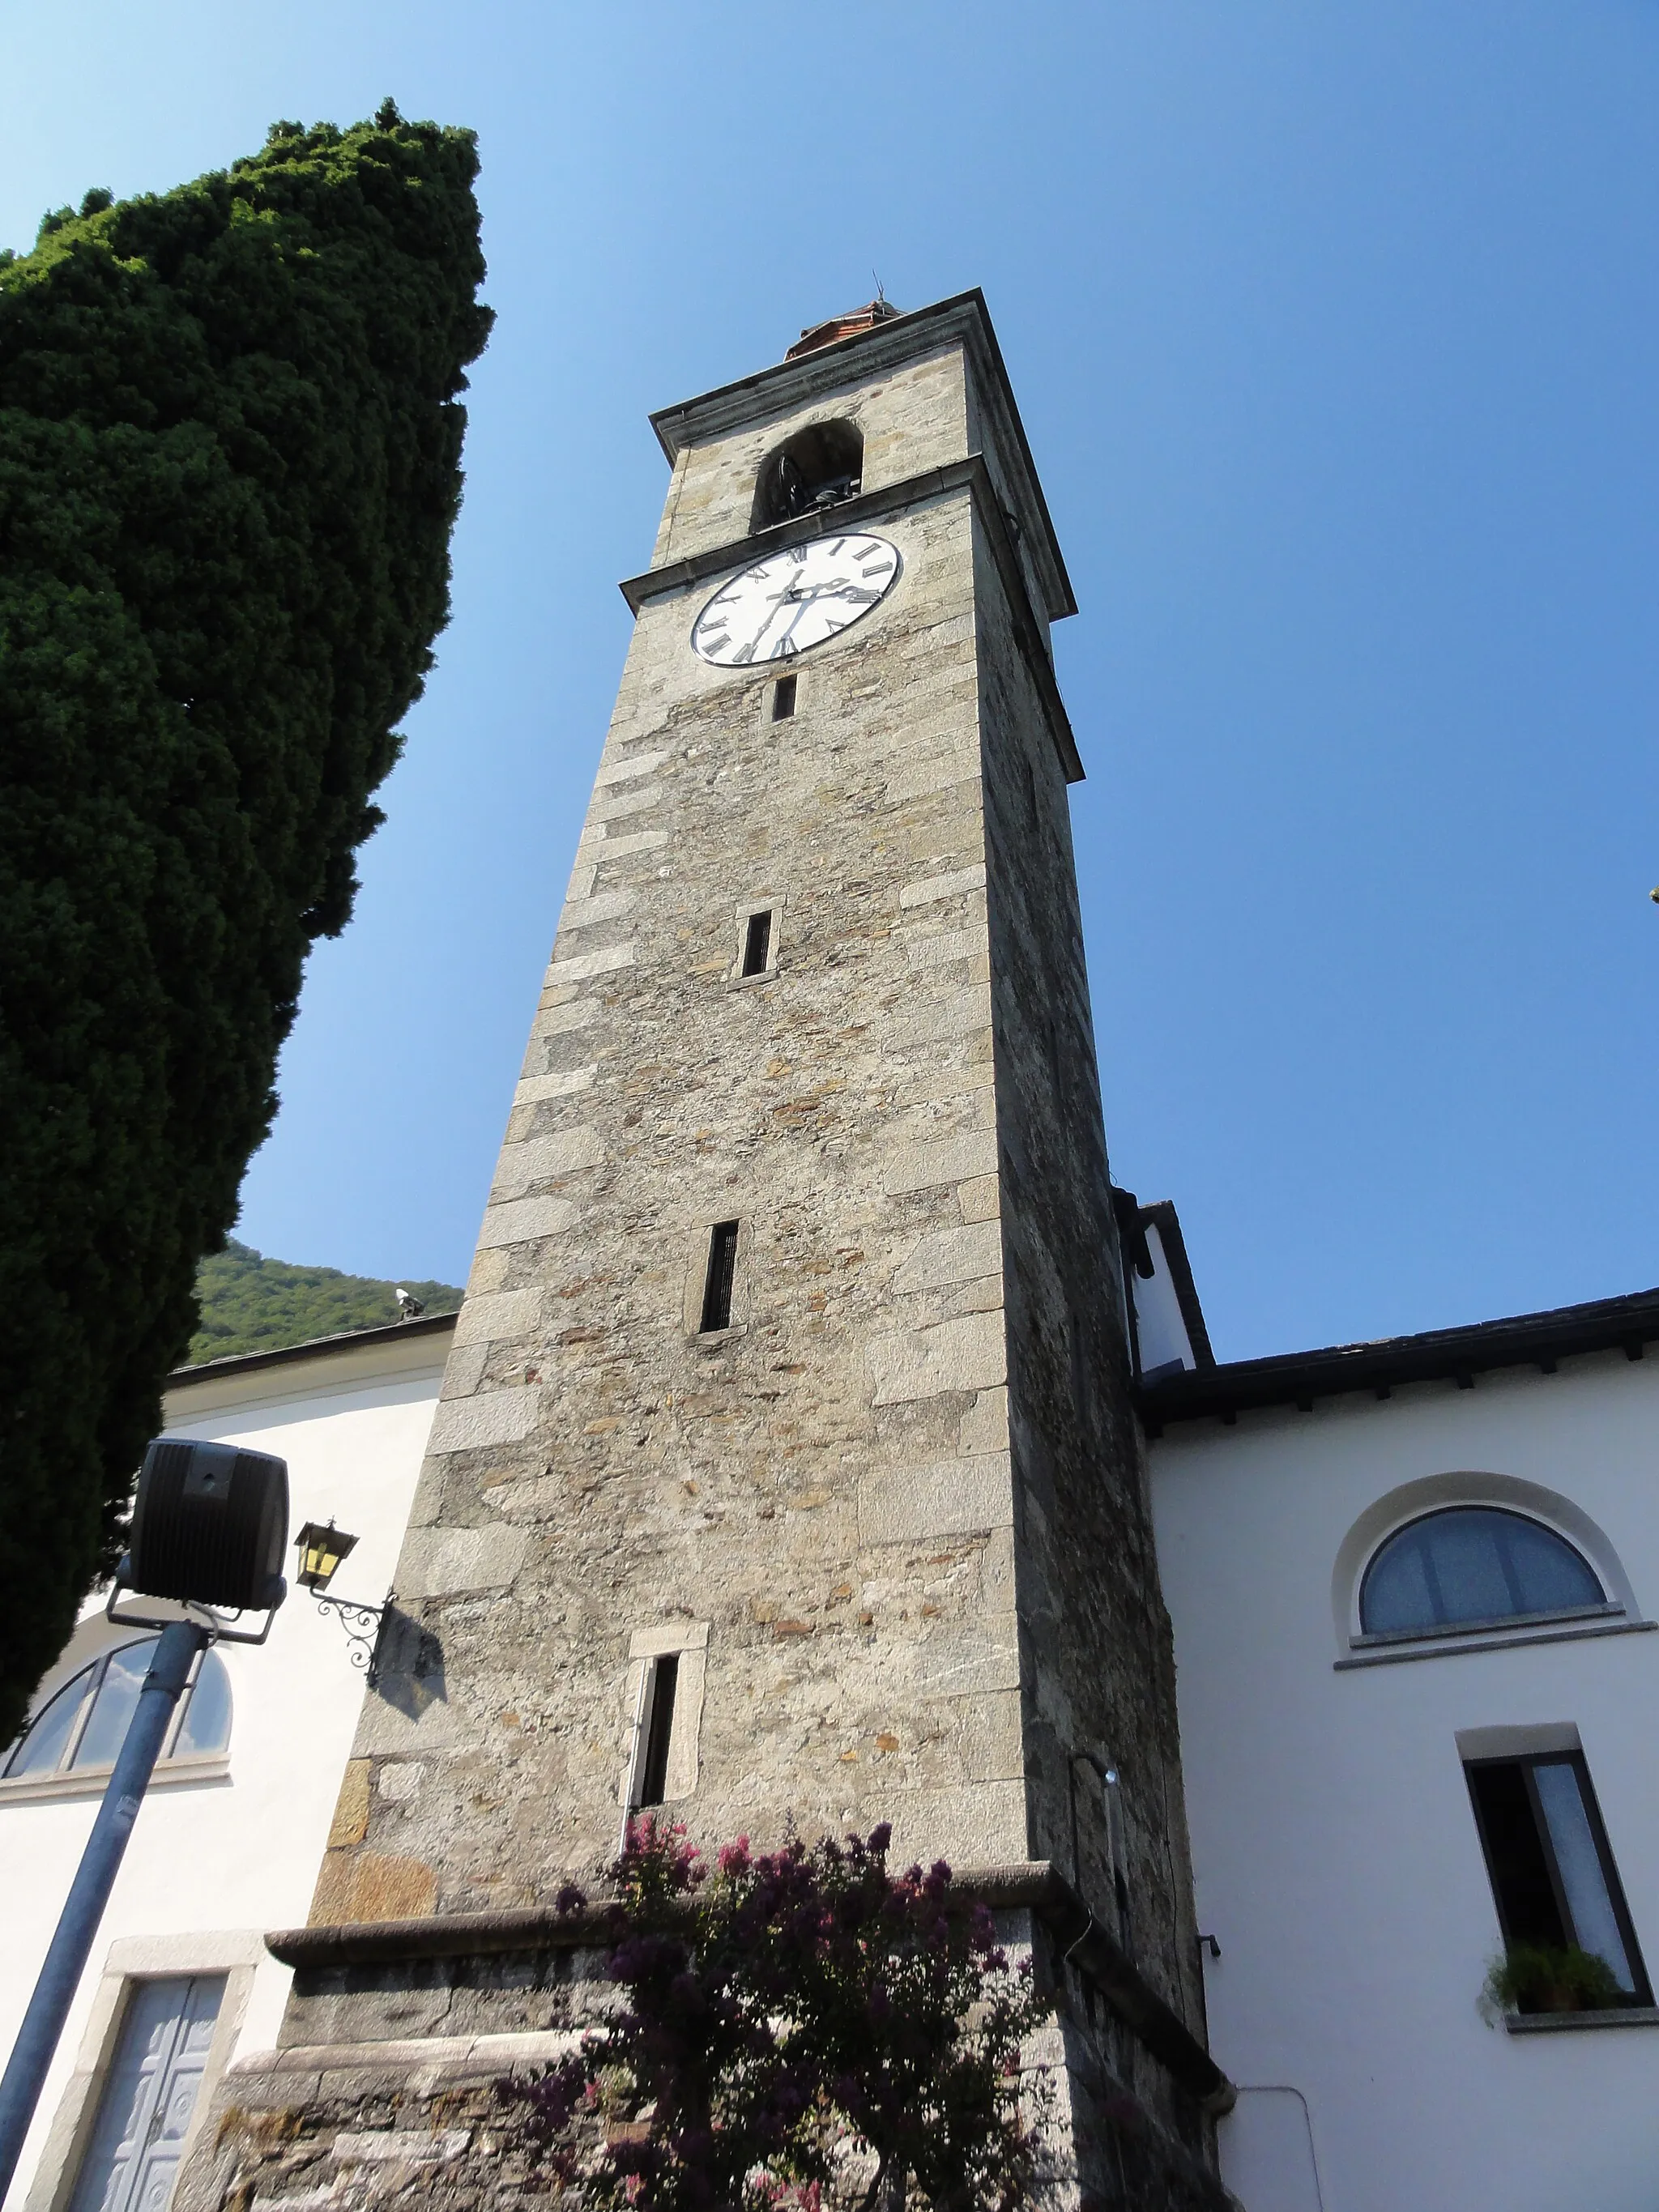 Photo showing: Schweiz - Ronco sopra Ascona (TI). Glockenturm der Kirche St Martino